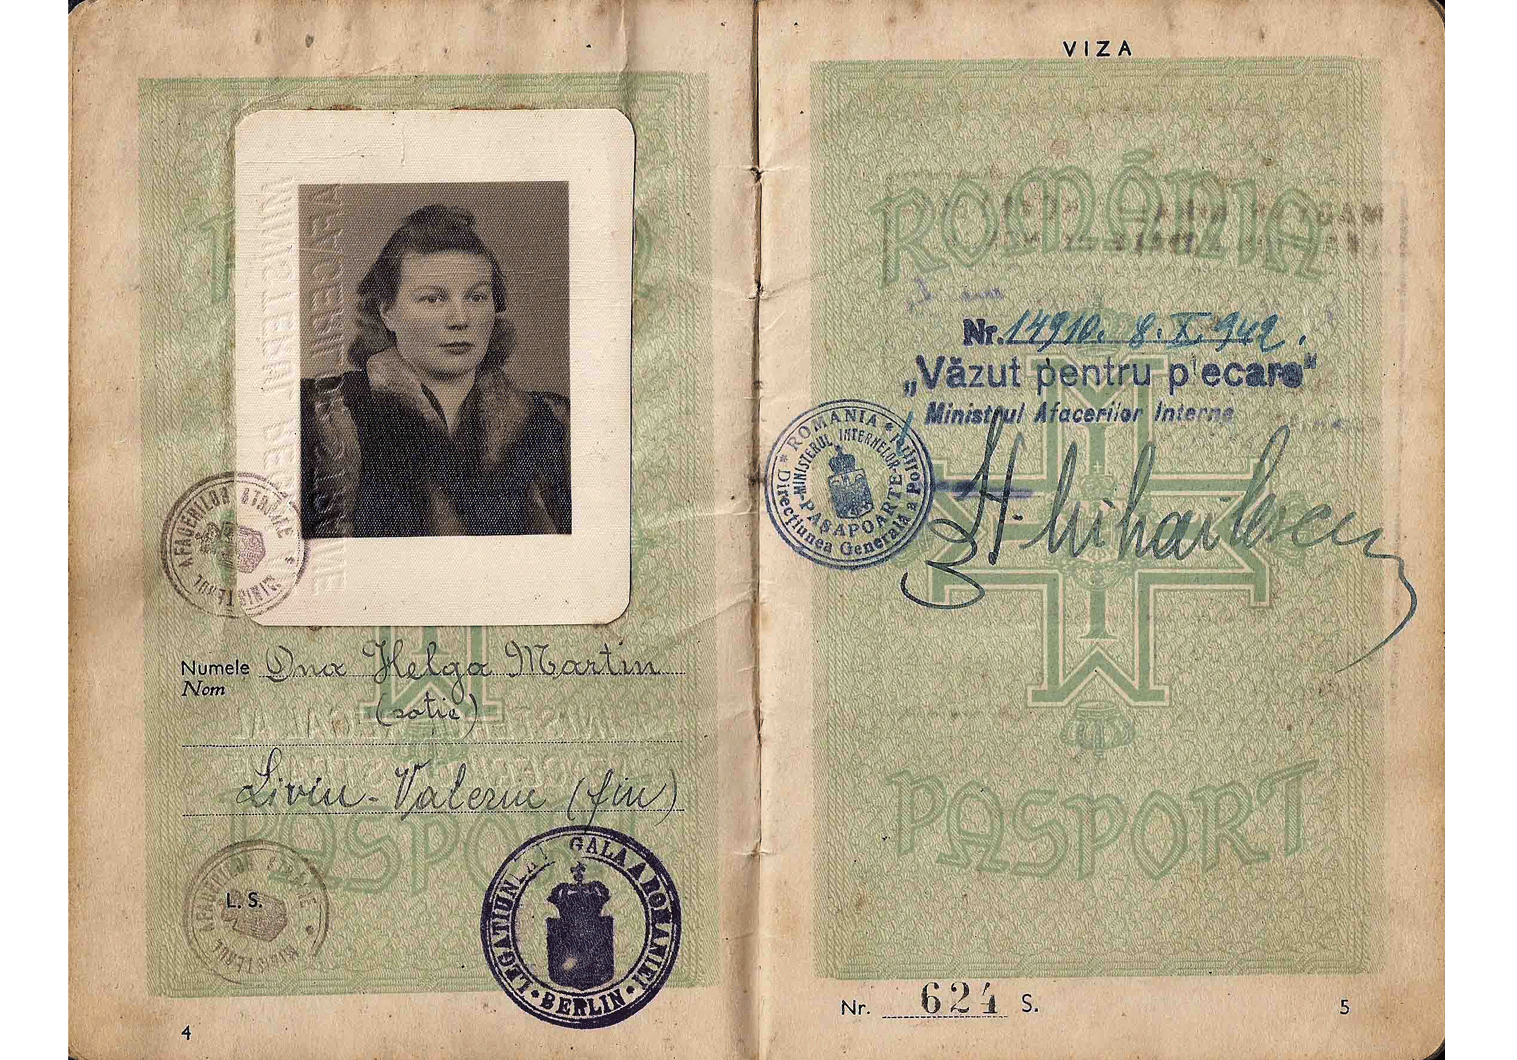 WW2 Service passport